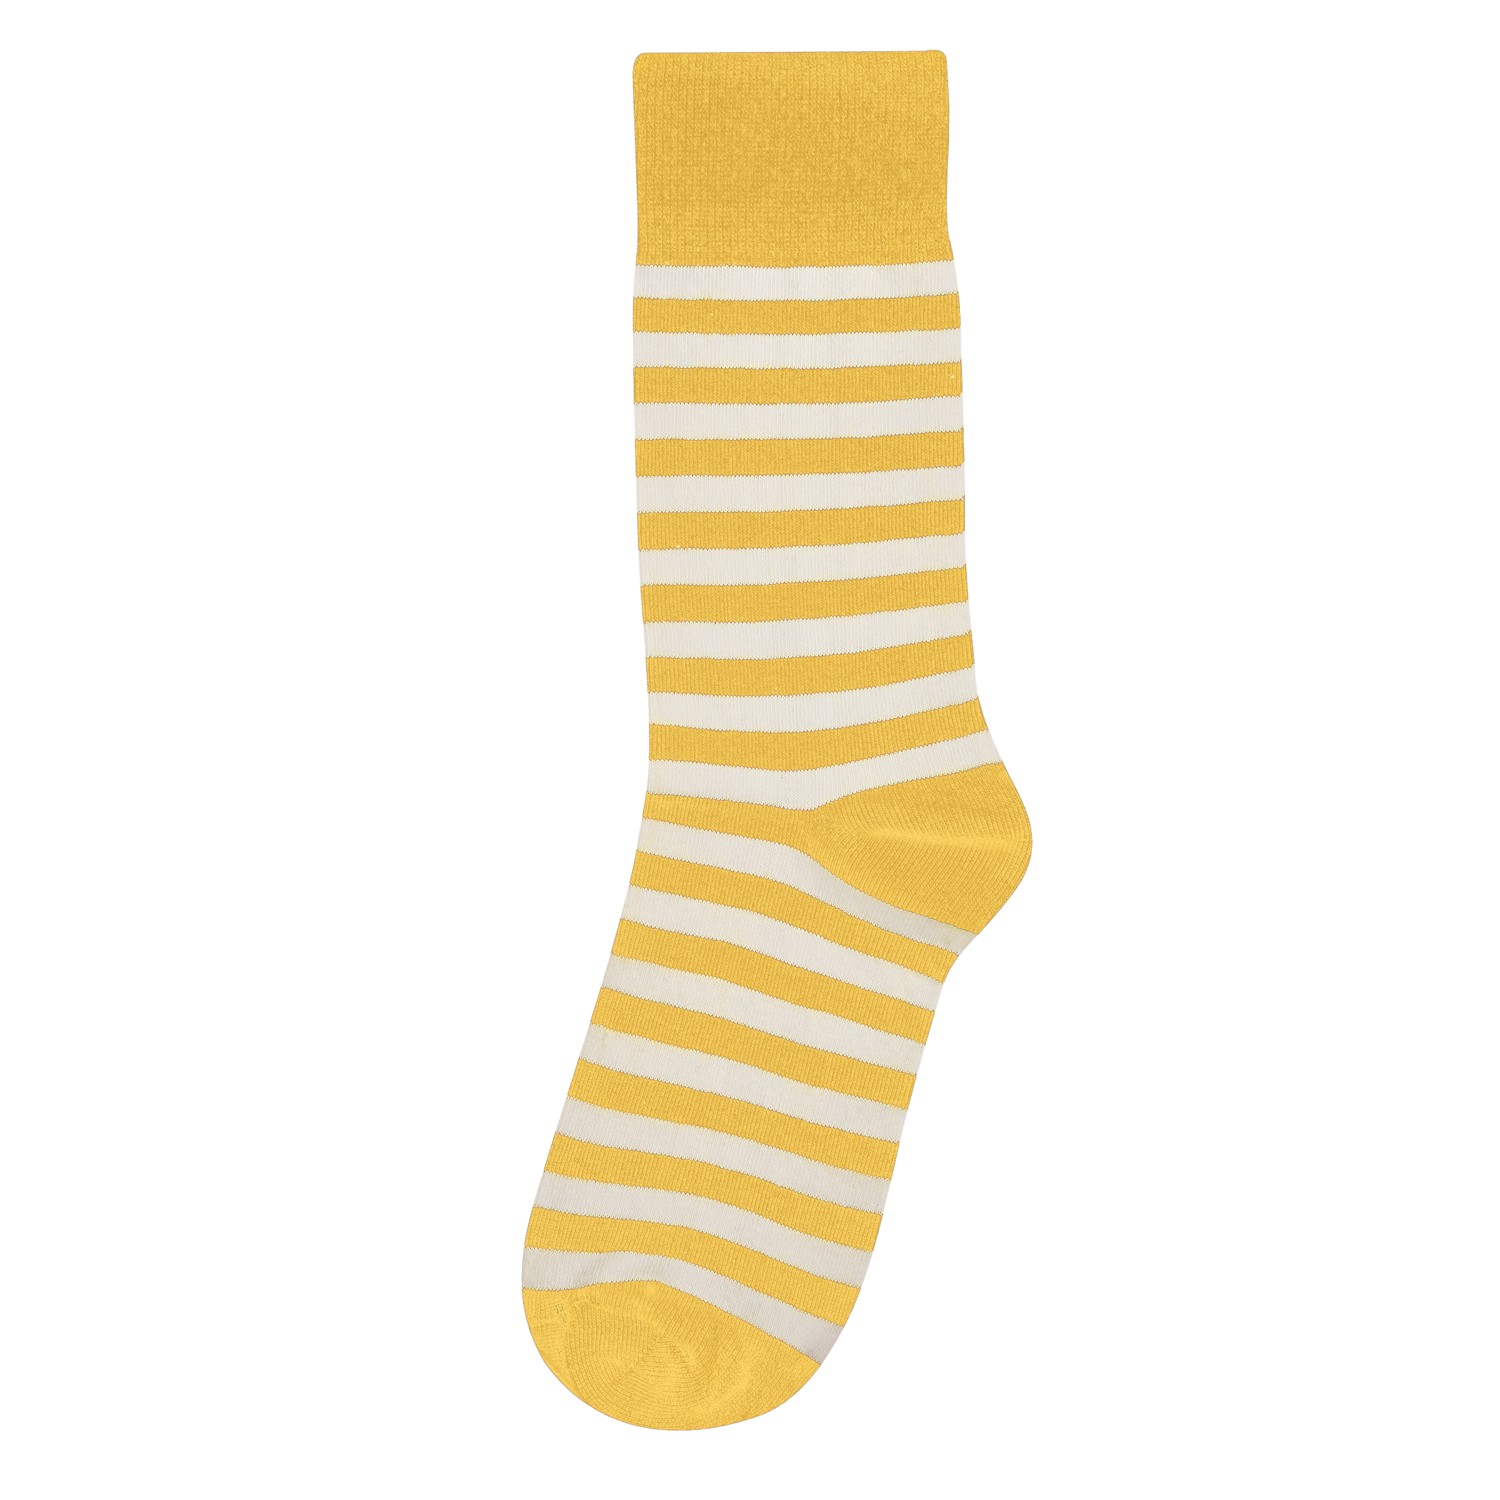 Stripes and Polka Dots Socks Collection | Signals